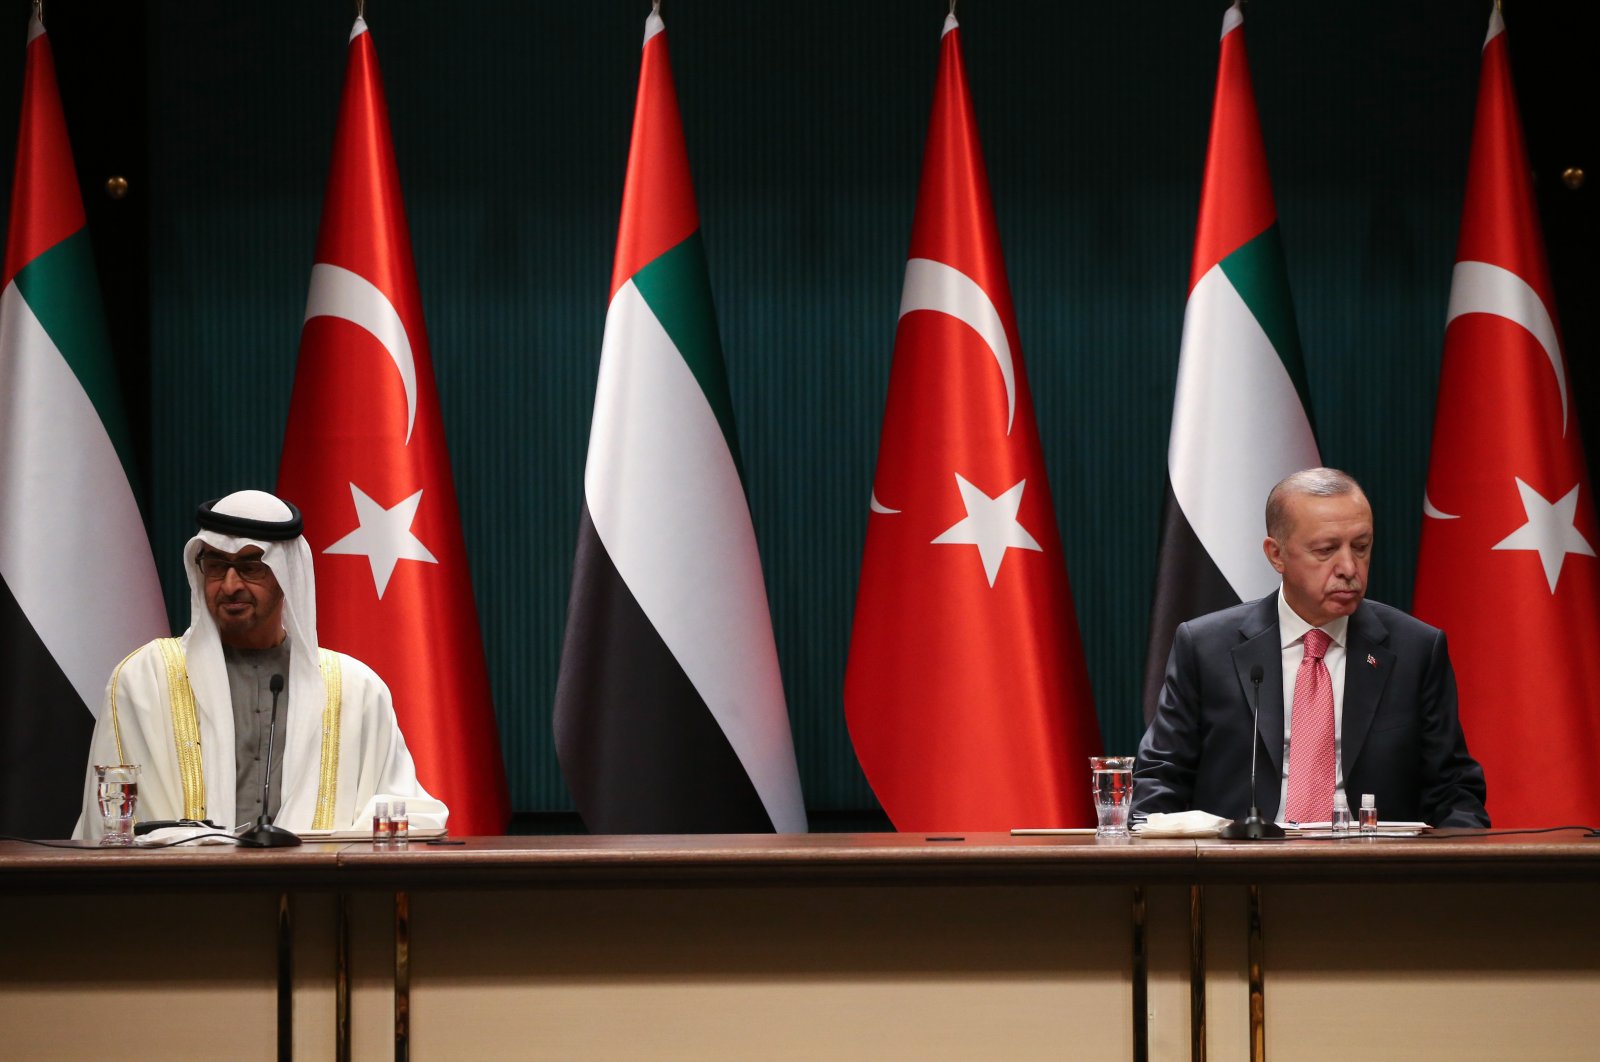 President Recep Tayyip Erdoğan (R) and Abu Dhabi Crown Prince Sheikh Mohammed bin Zayed Al Nahyan (MBZ) during an agreement ceremony after their meeting in the capital Ankara, Turkey, Nov. 24, 2021. (EPA Photo)